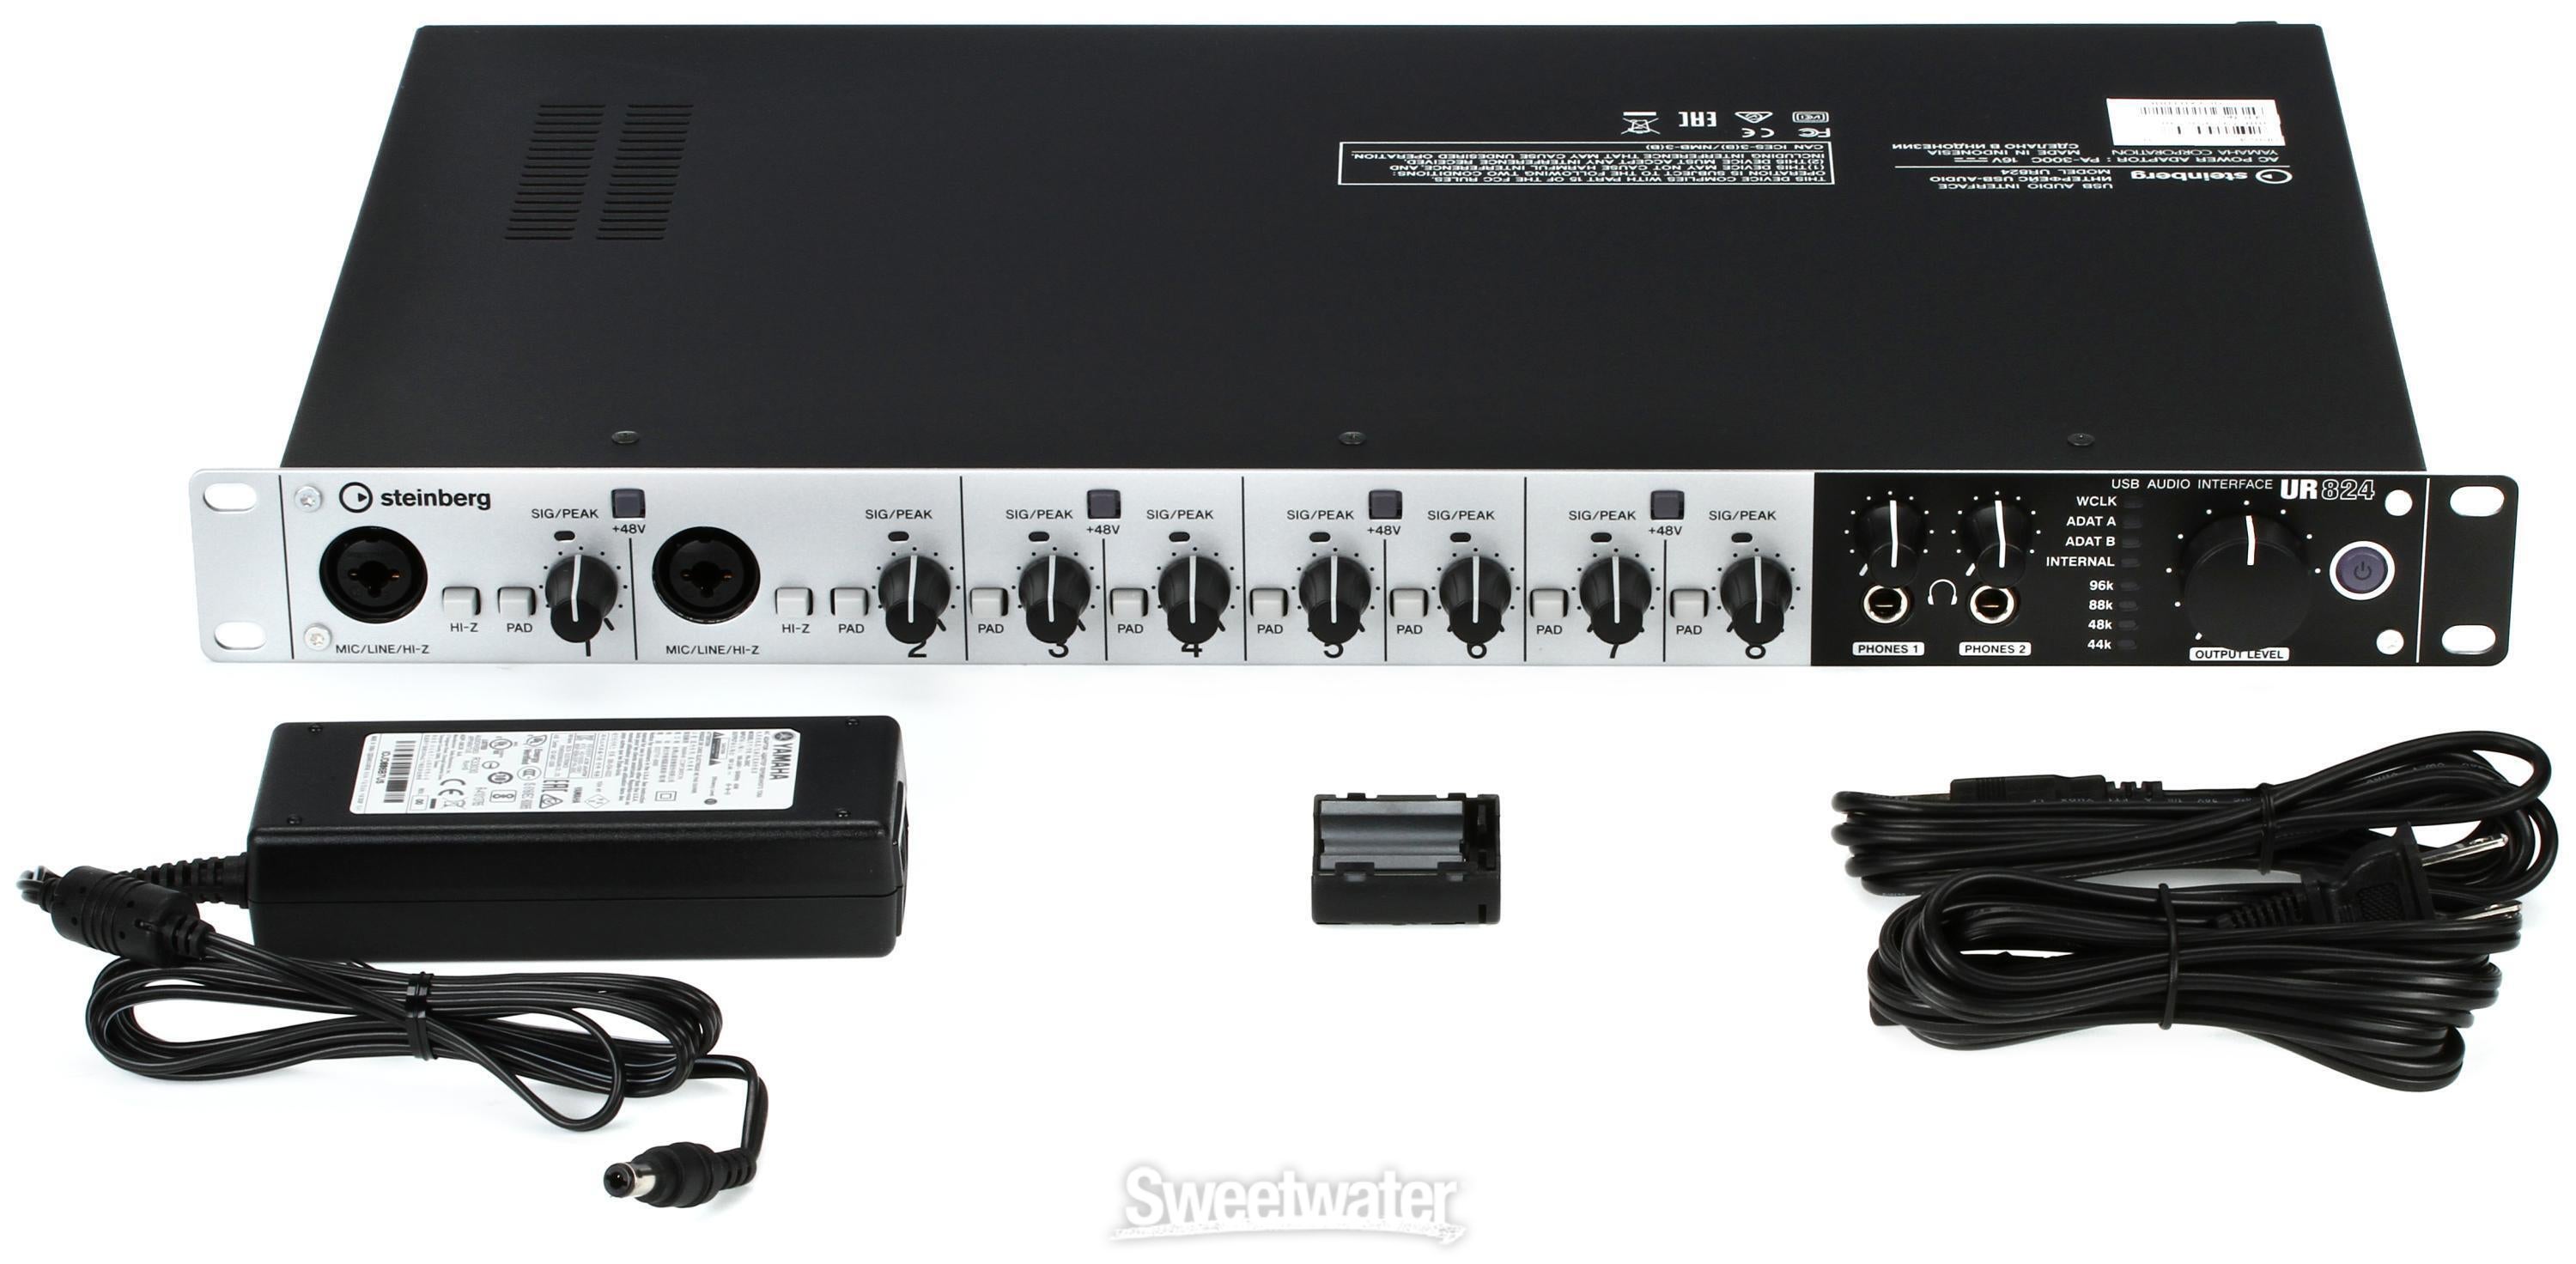 Steinberg UR824 USB Audio Interface Reviews | Sweetwater